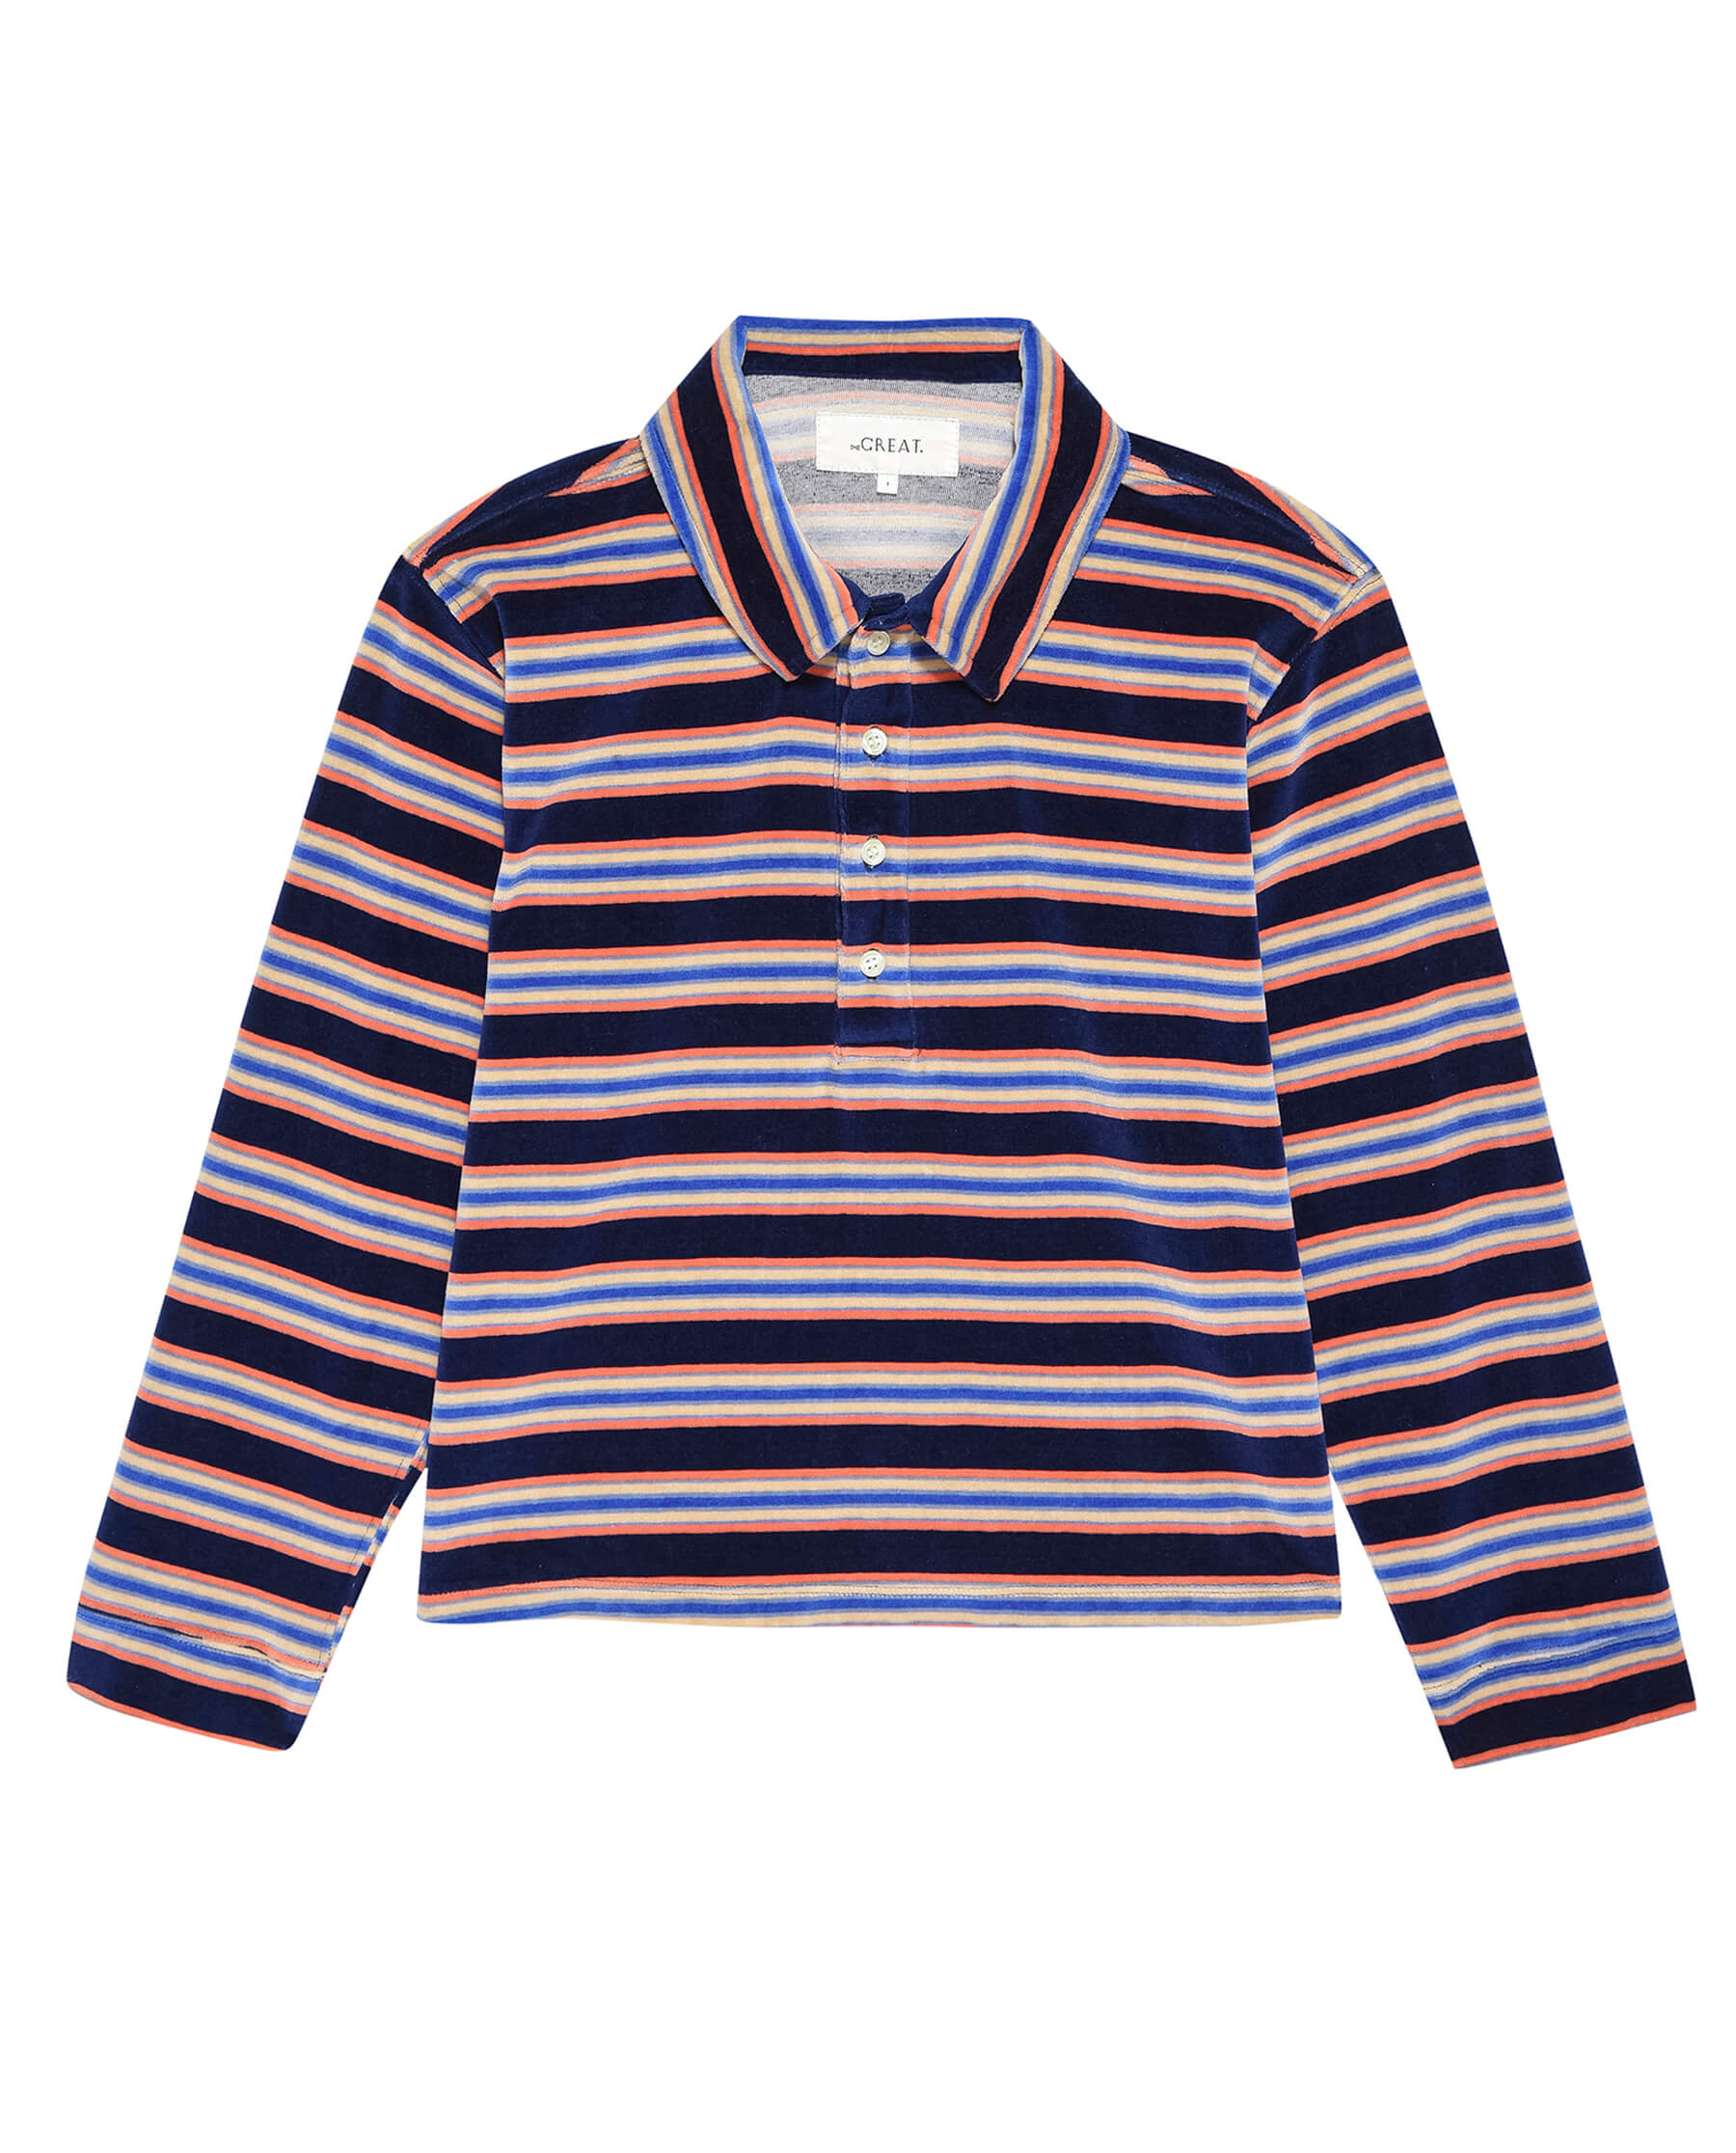 The Velour Rugby Sweatshirt. -- Scrimmage Stripe